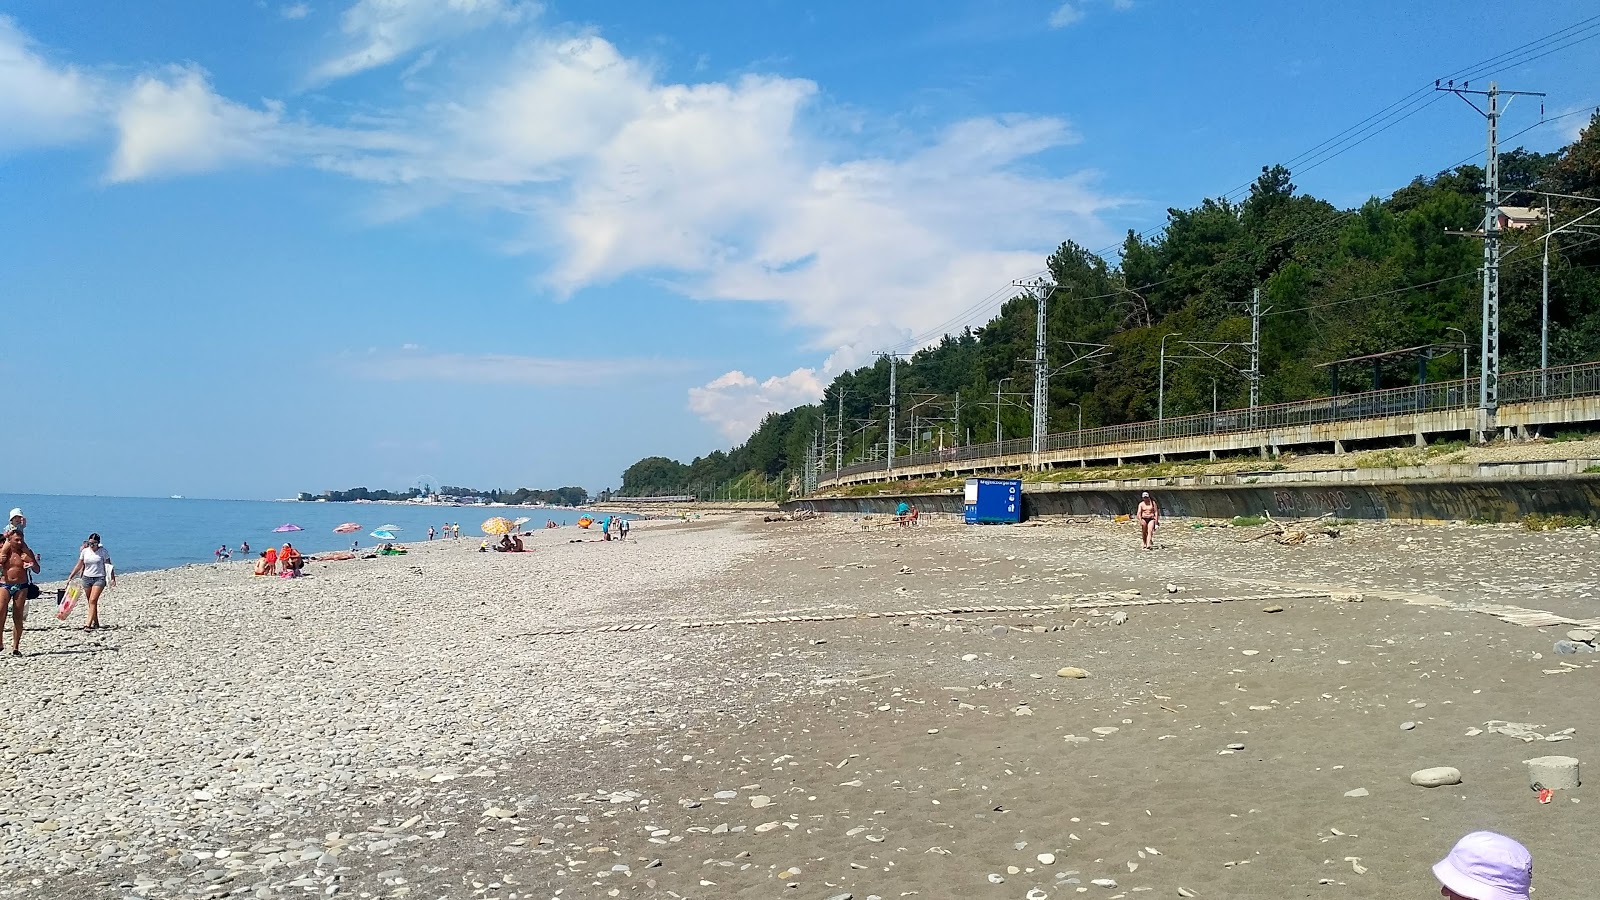 Foto de Thessaloniki beach com pebble cinza superfície